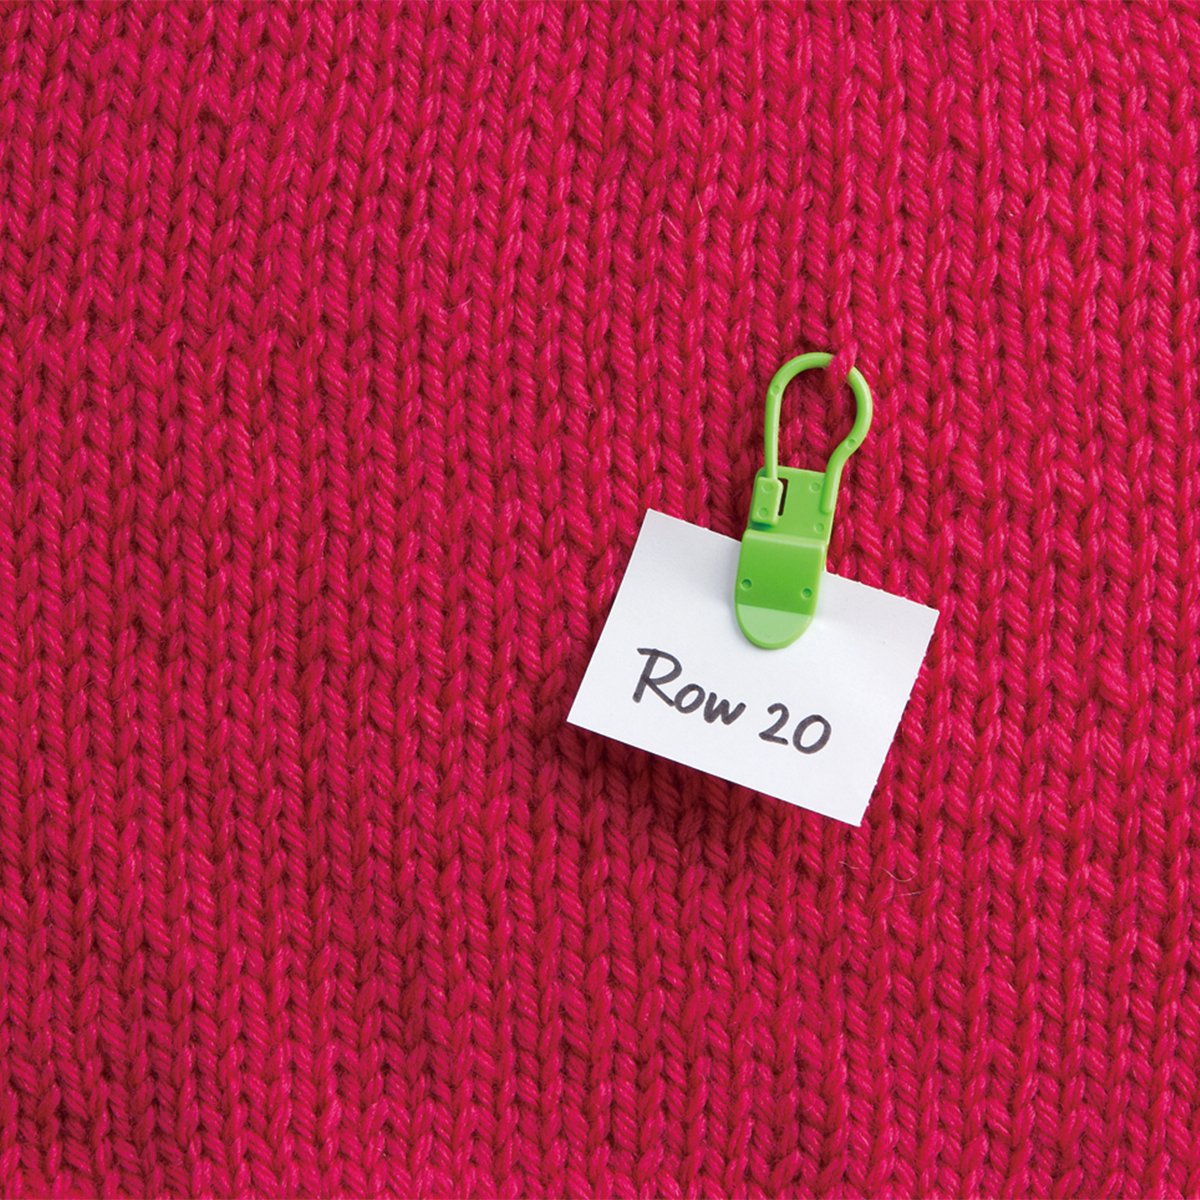  112Pcs Knitting Markers Stitch Locking Clips, Crochet Pins  Crochet Markers, Stitch Markers for Crocheting, Stitch Marker Crochet Clips  with Big Eye Blunt Sewing Needles and Needle Bottle